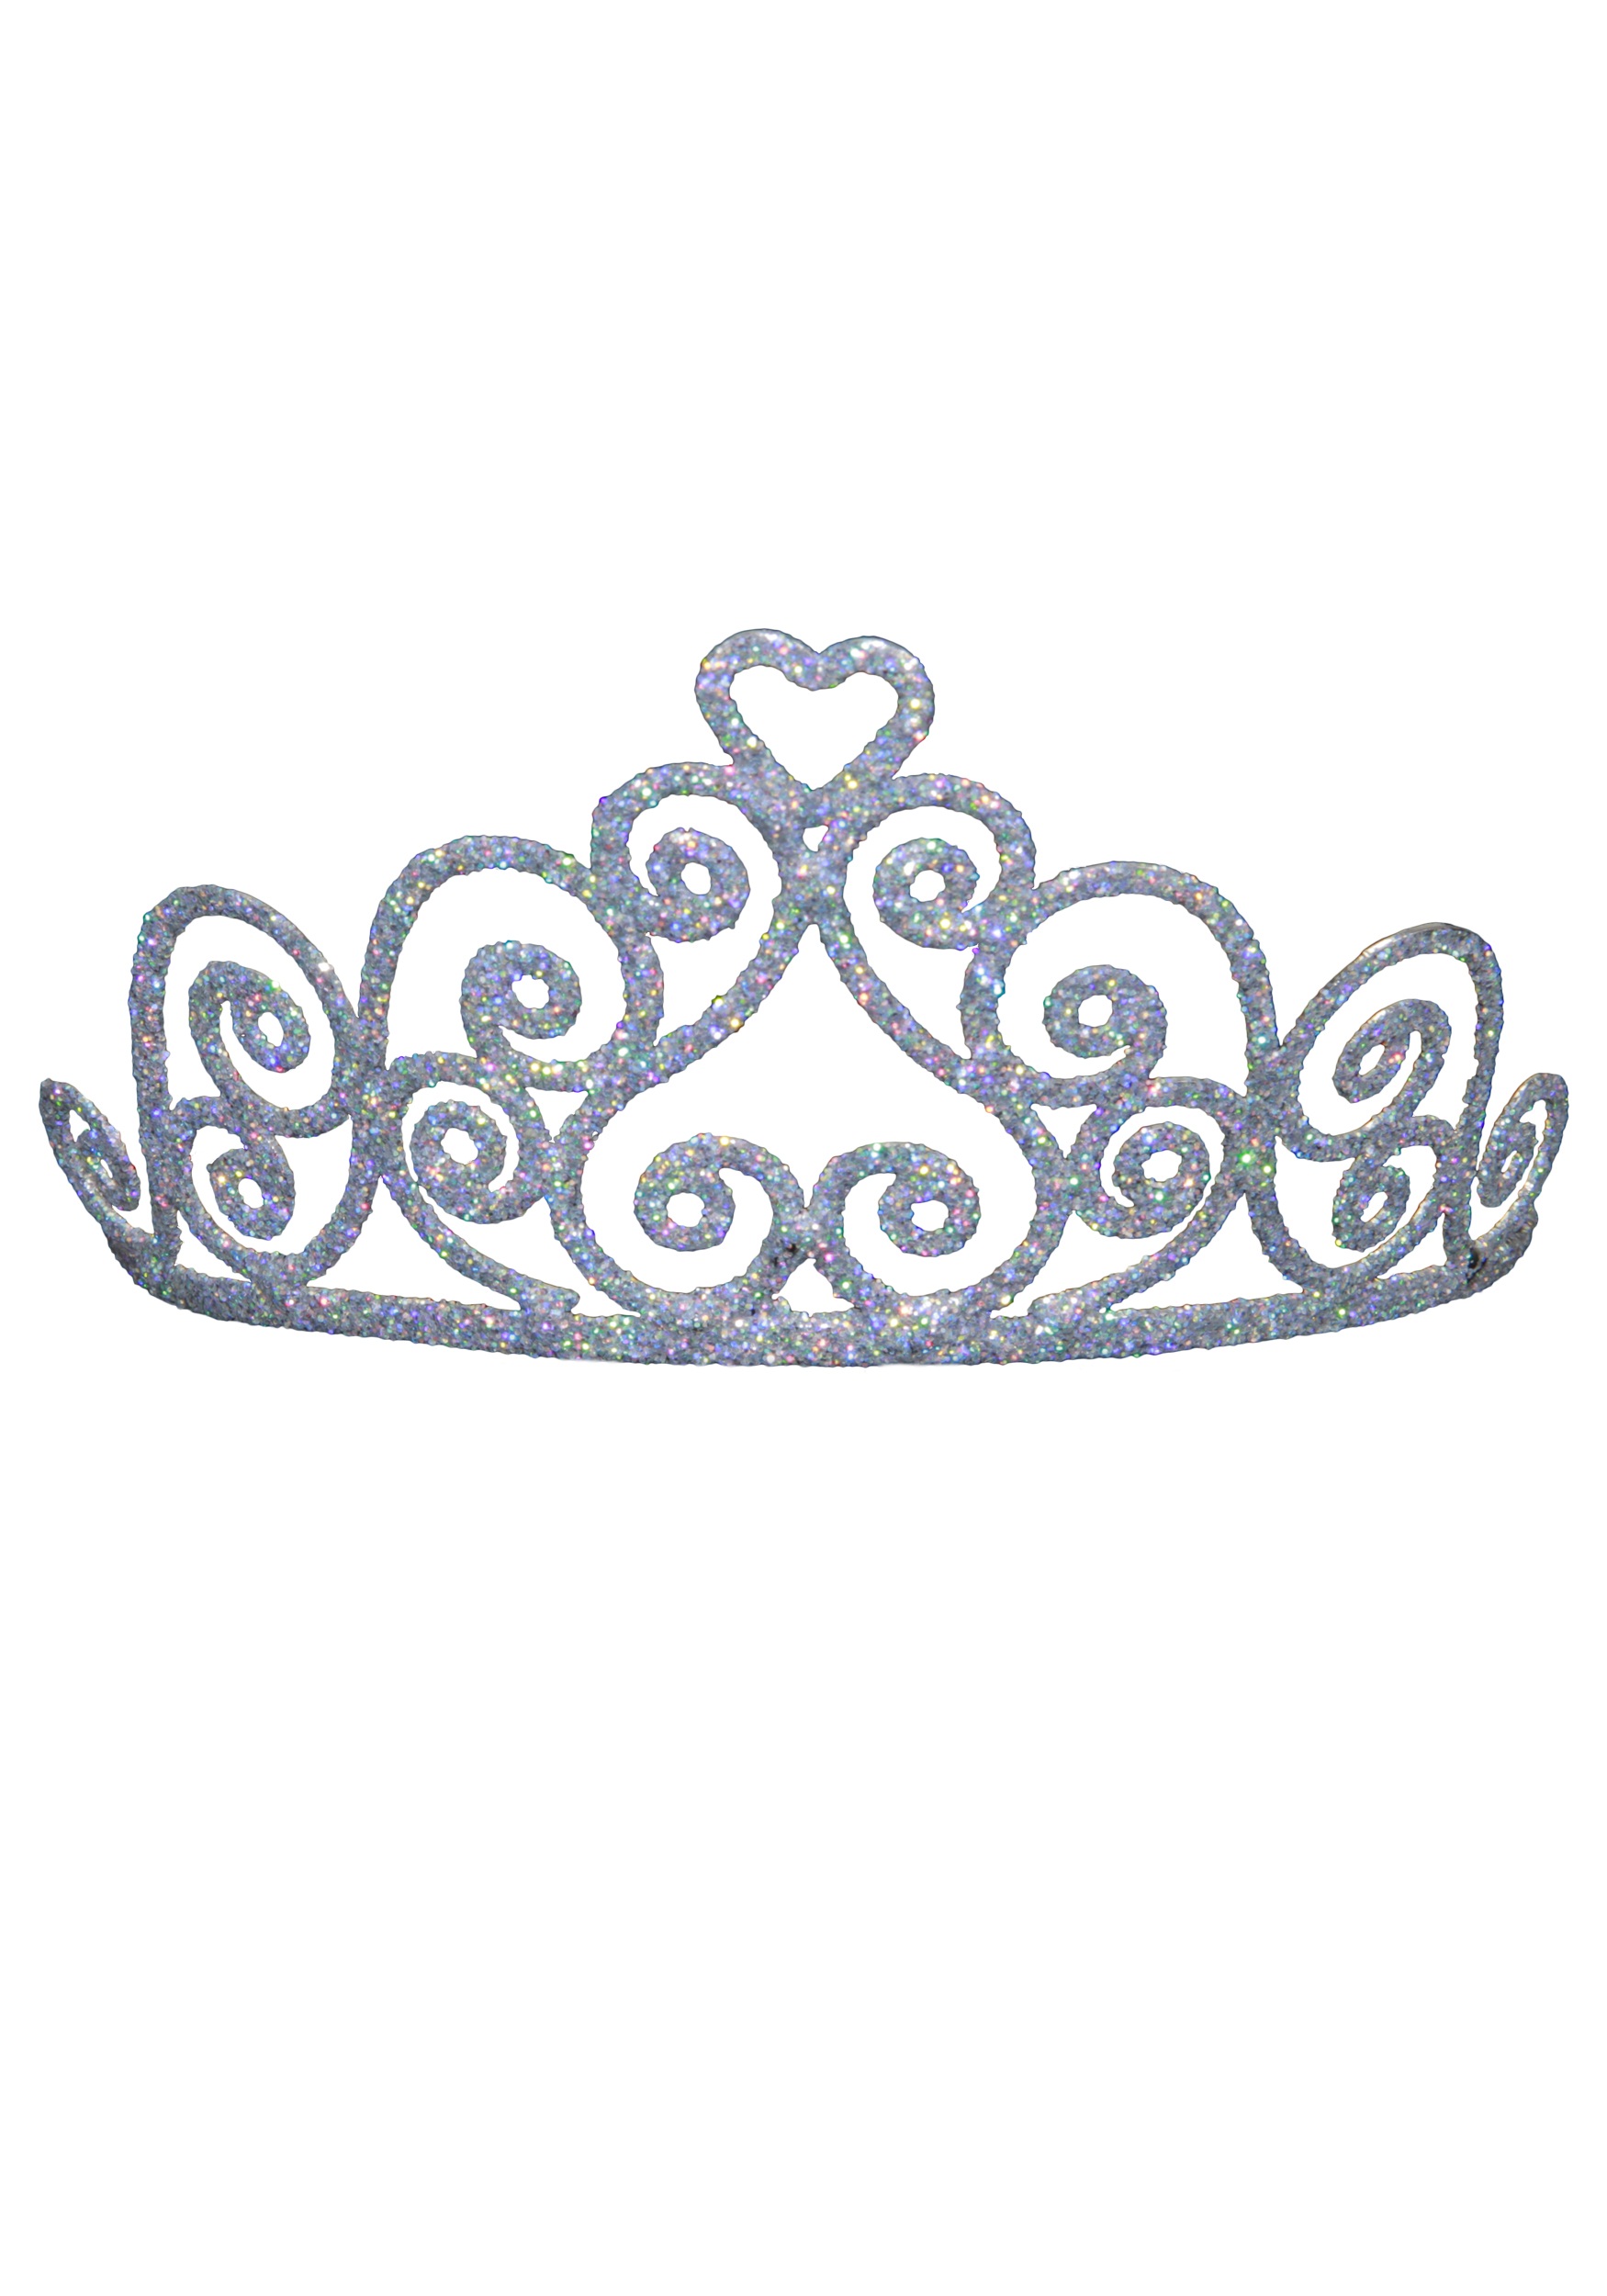 Tiara Princess Crown Image Image Png Clipart